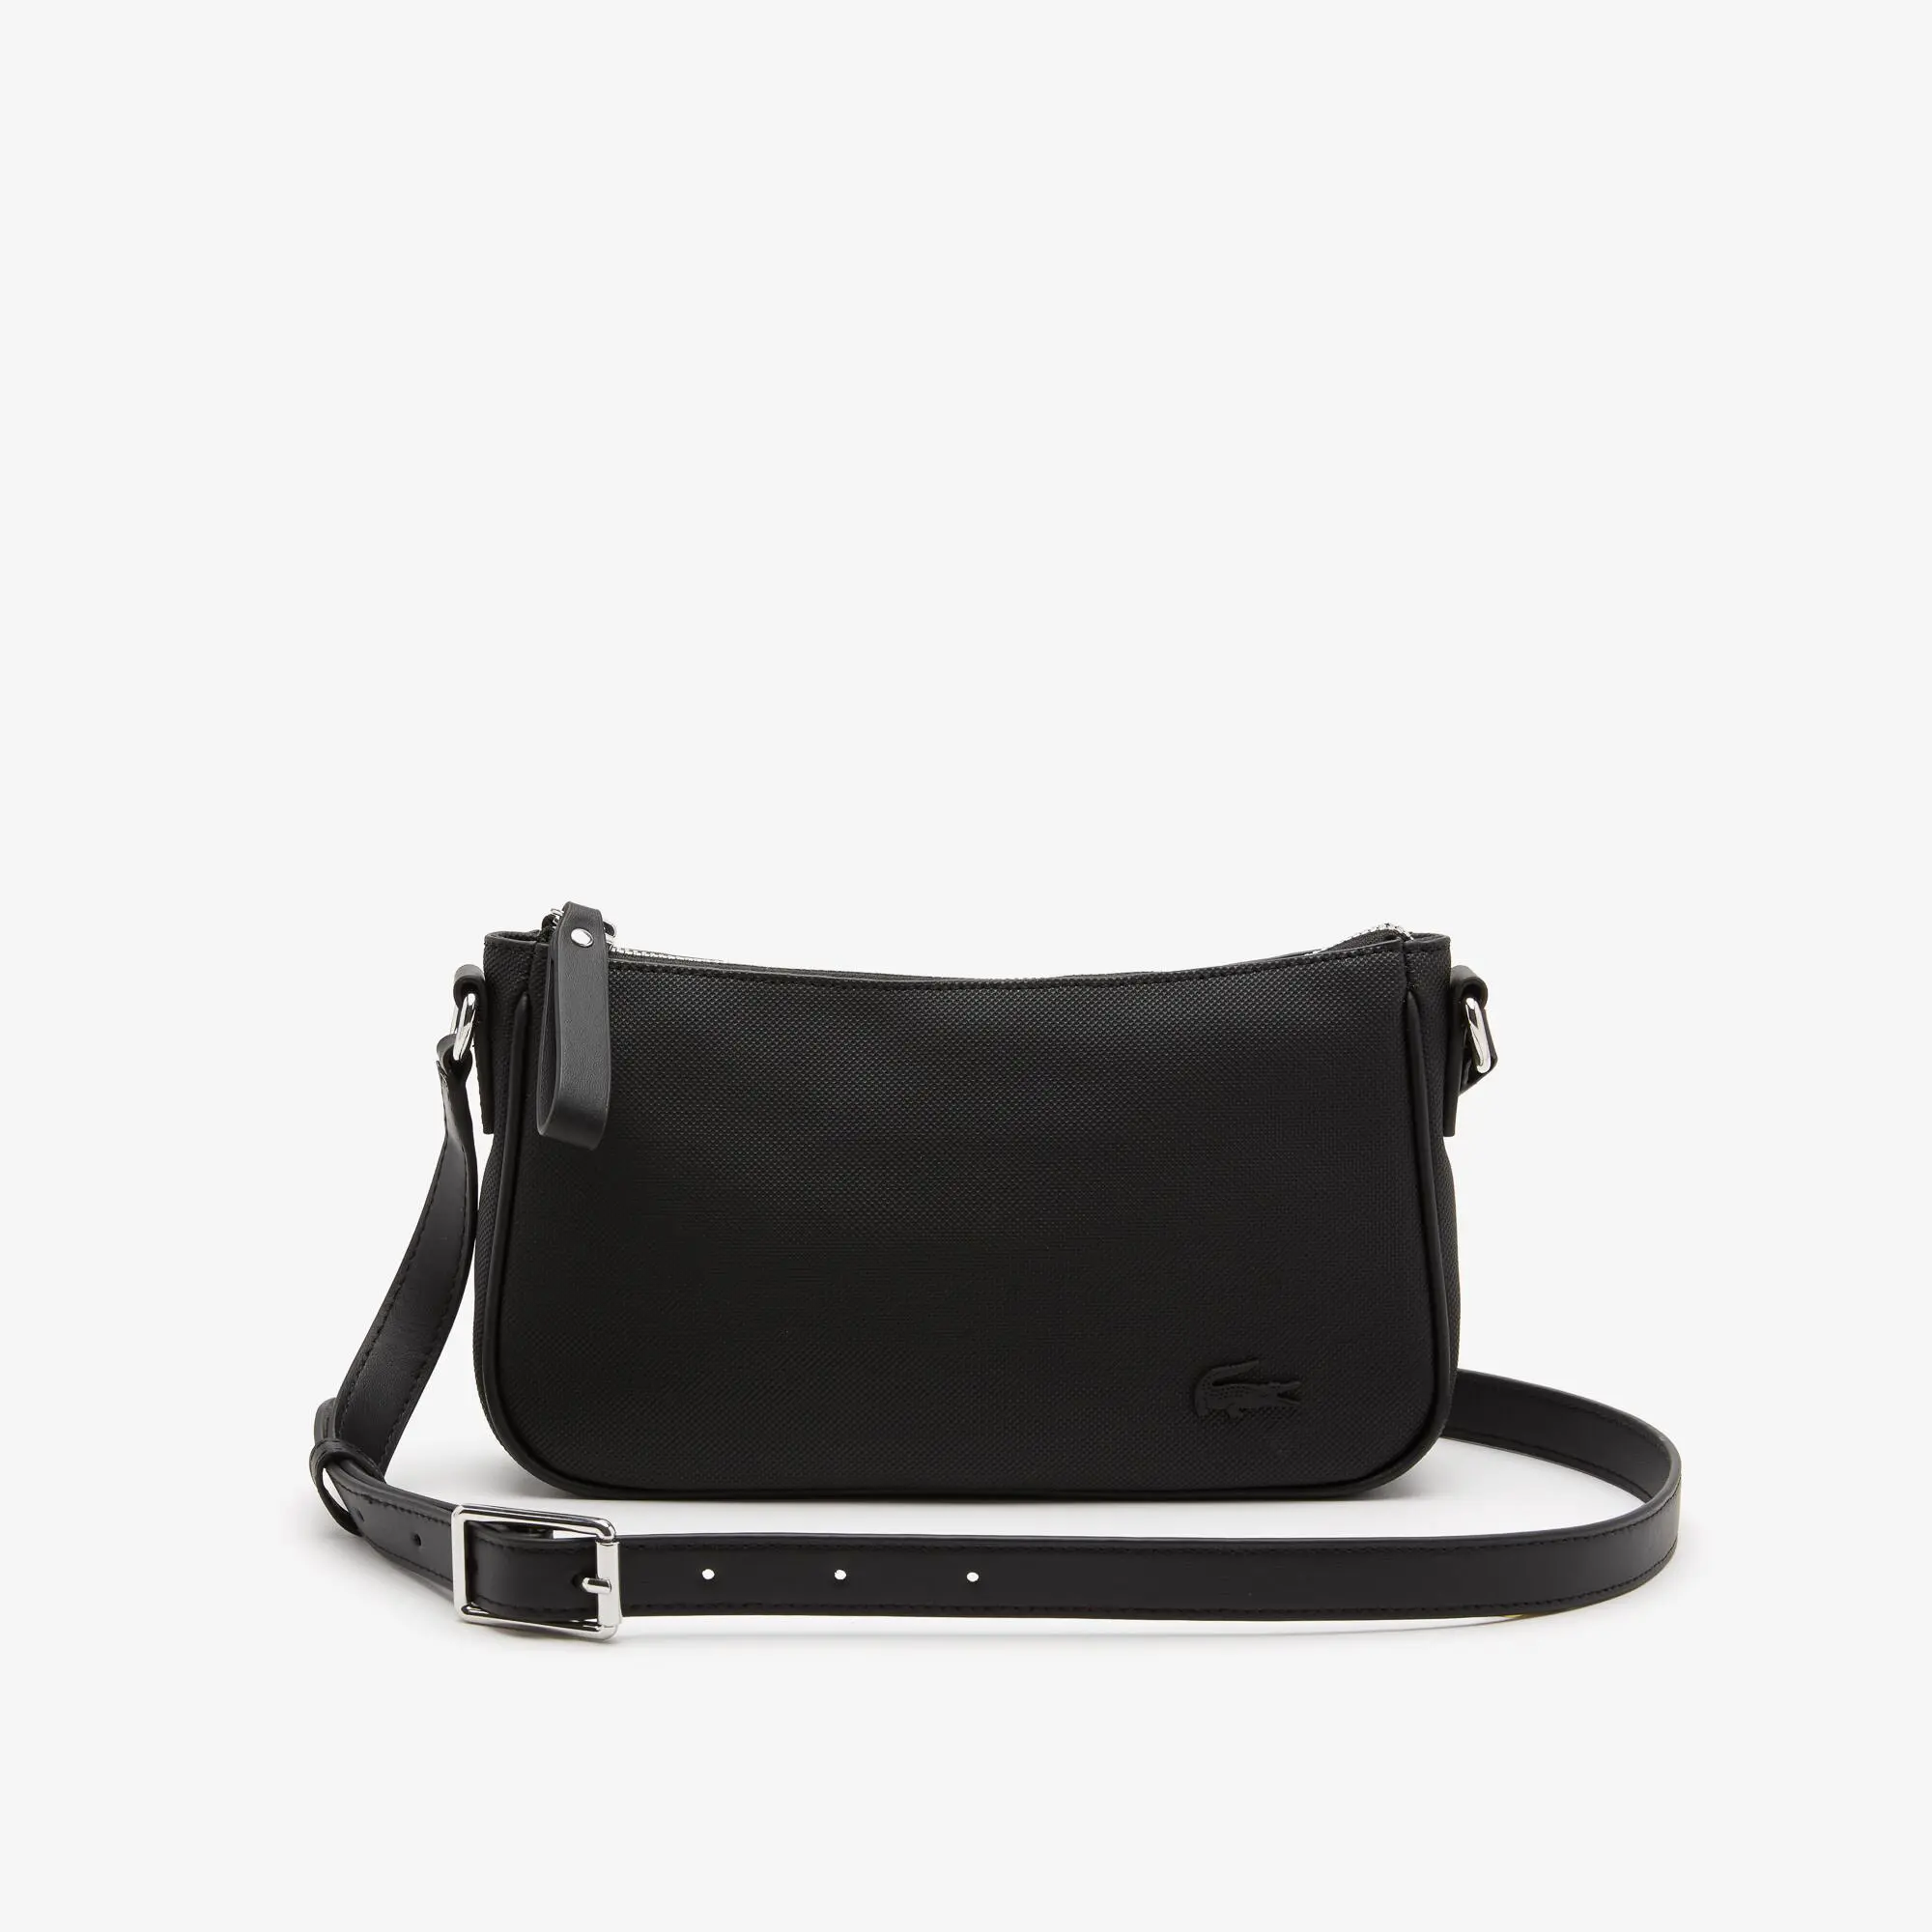 Lacoste Women's Lacoste Adjustable Strap Crossover Bag. 2